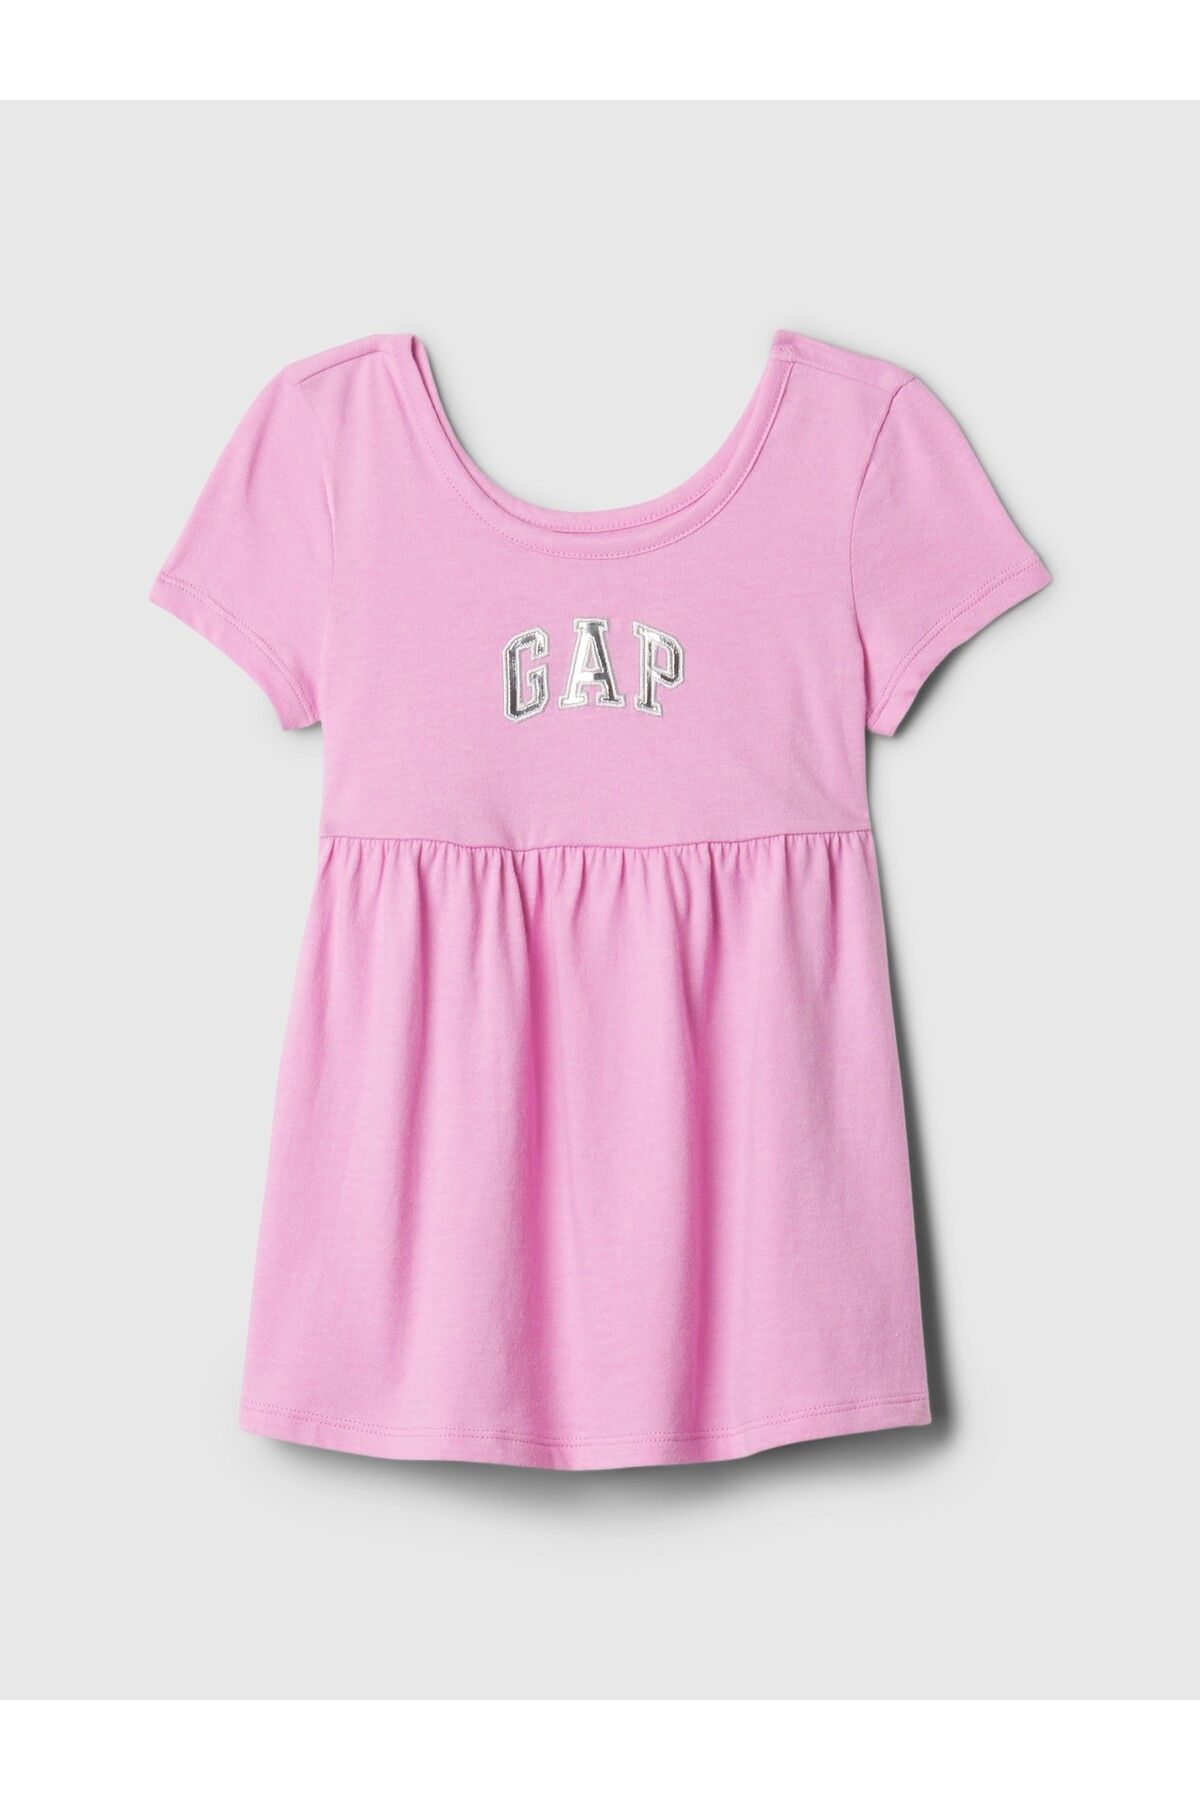 GAP Kız Bebek Pembe Gap Logo Elbise